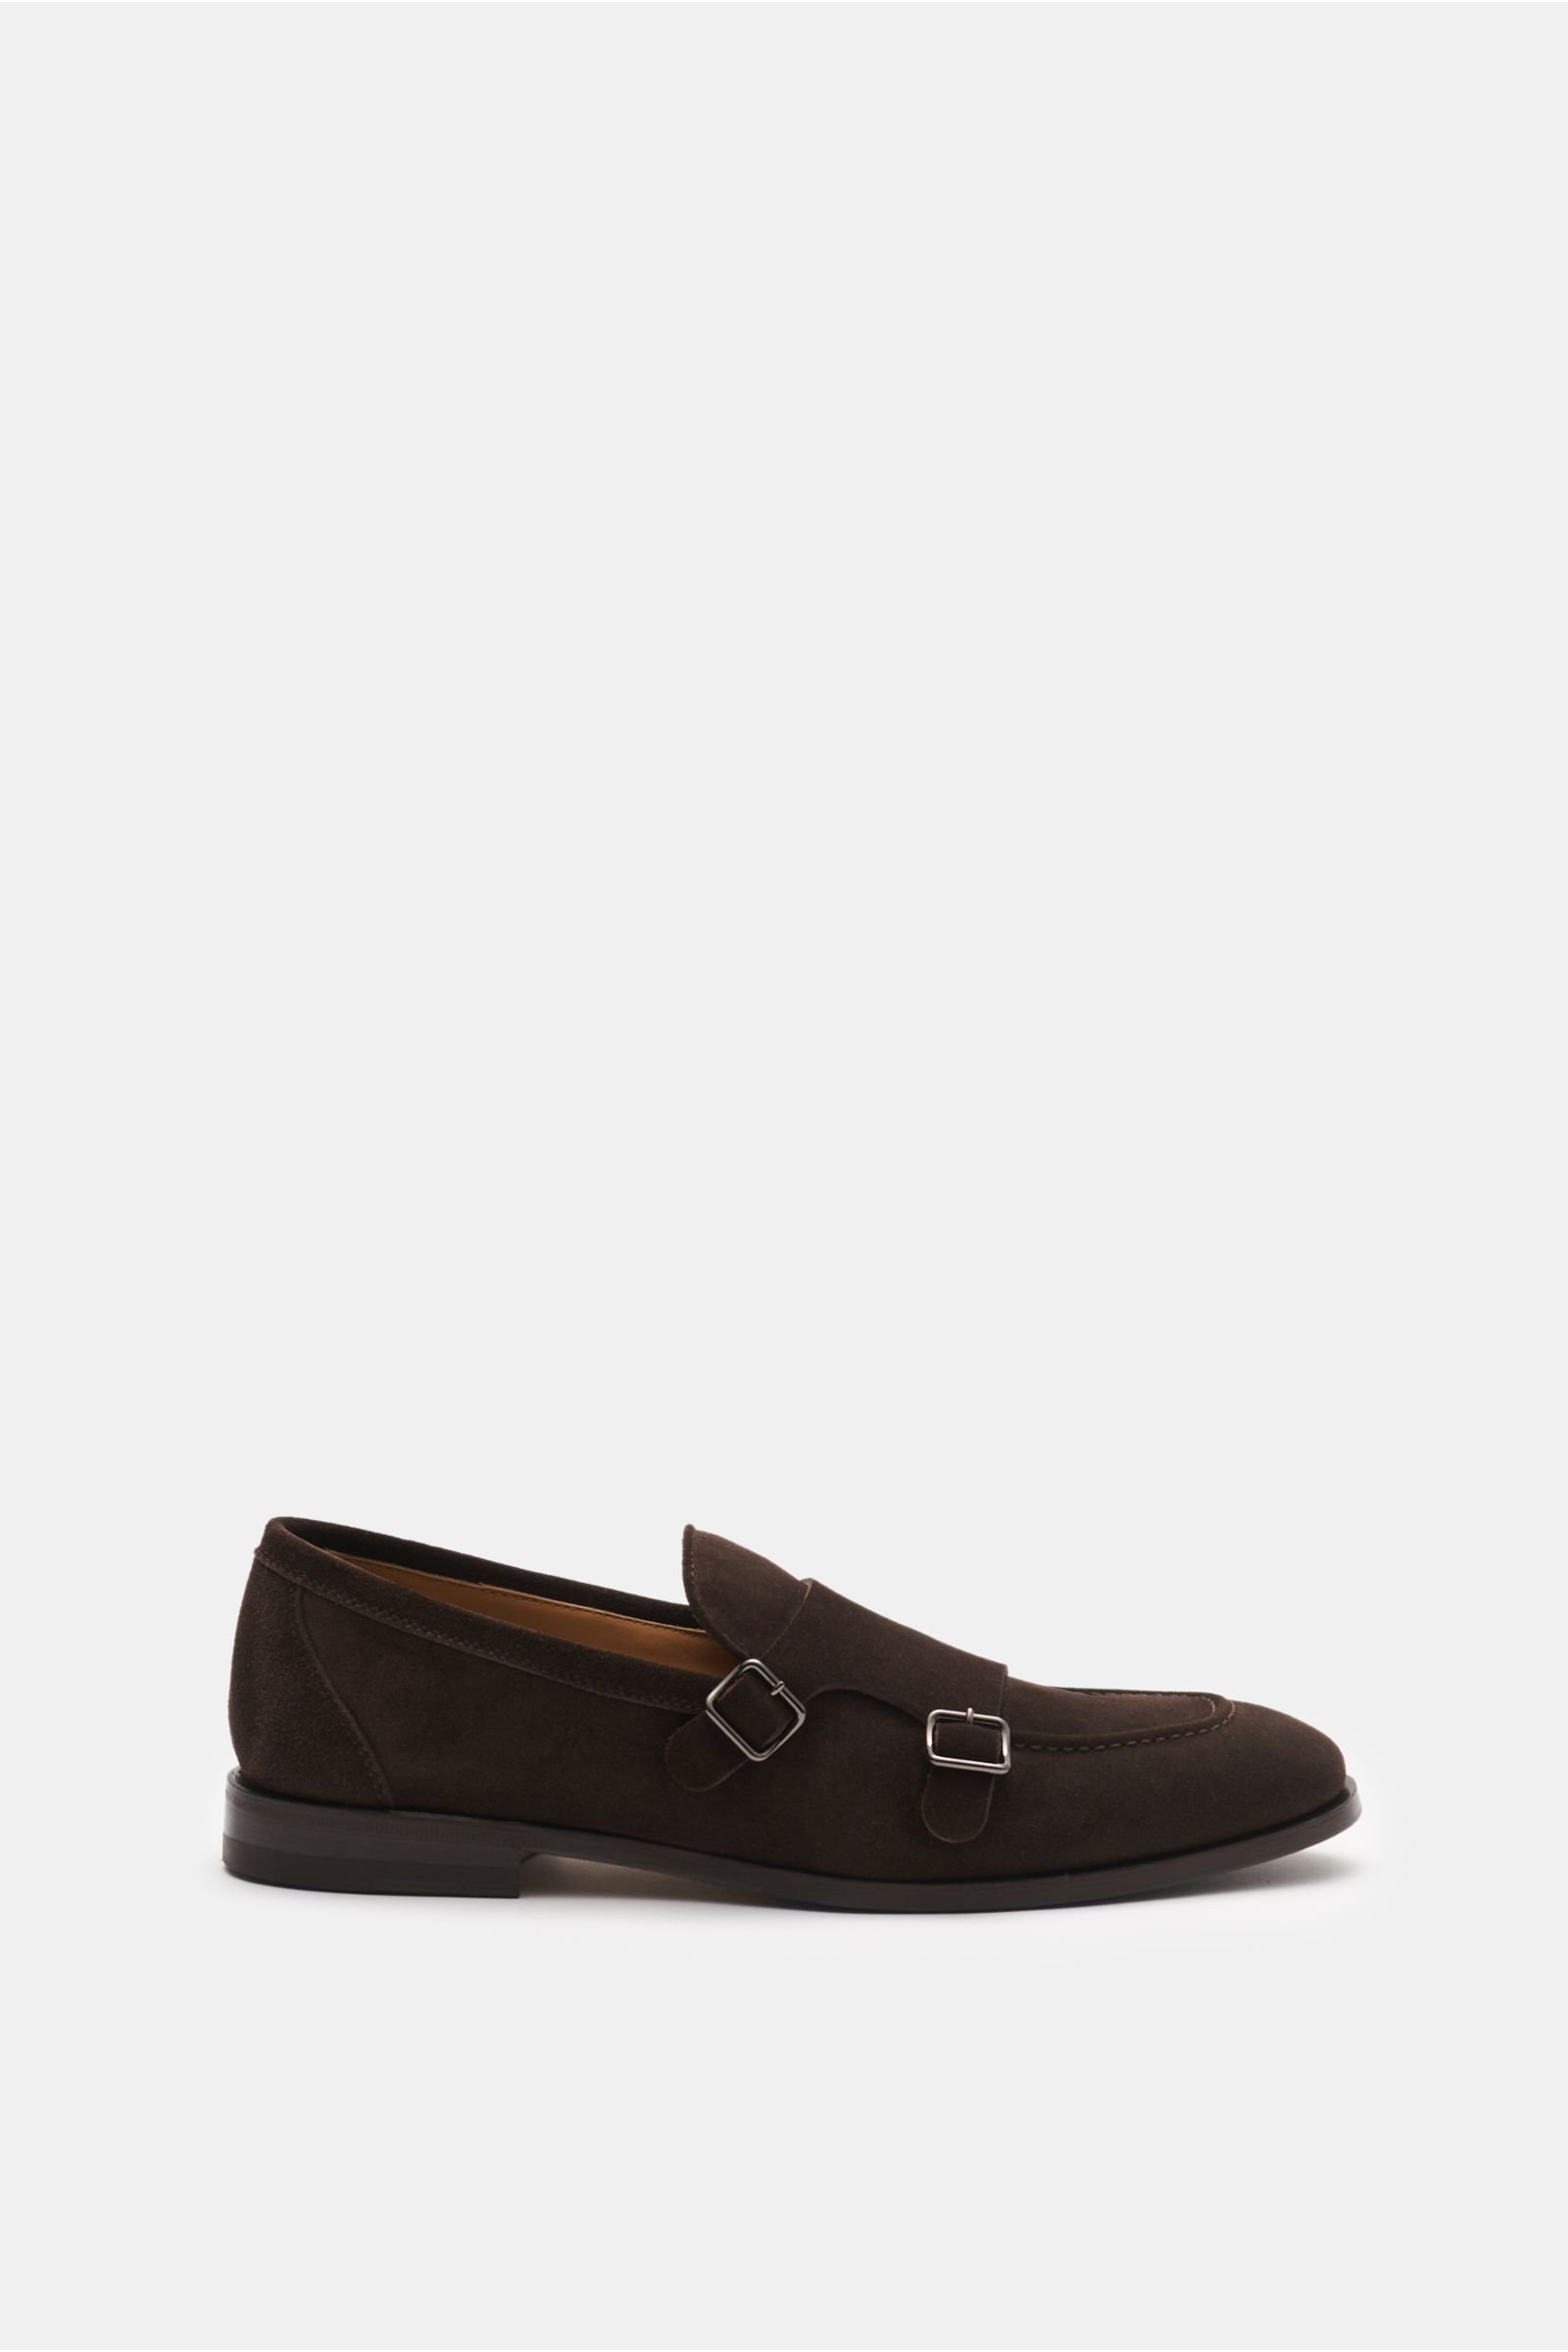 Double monk shoes dark brown